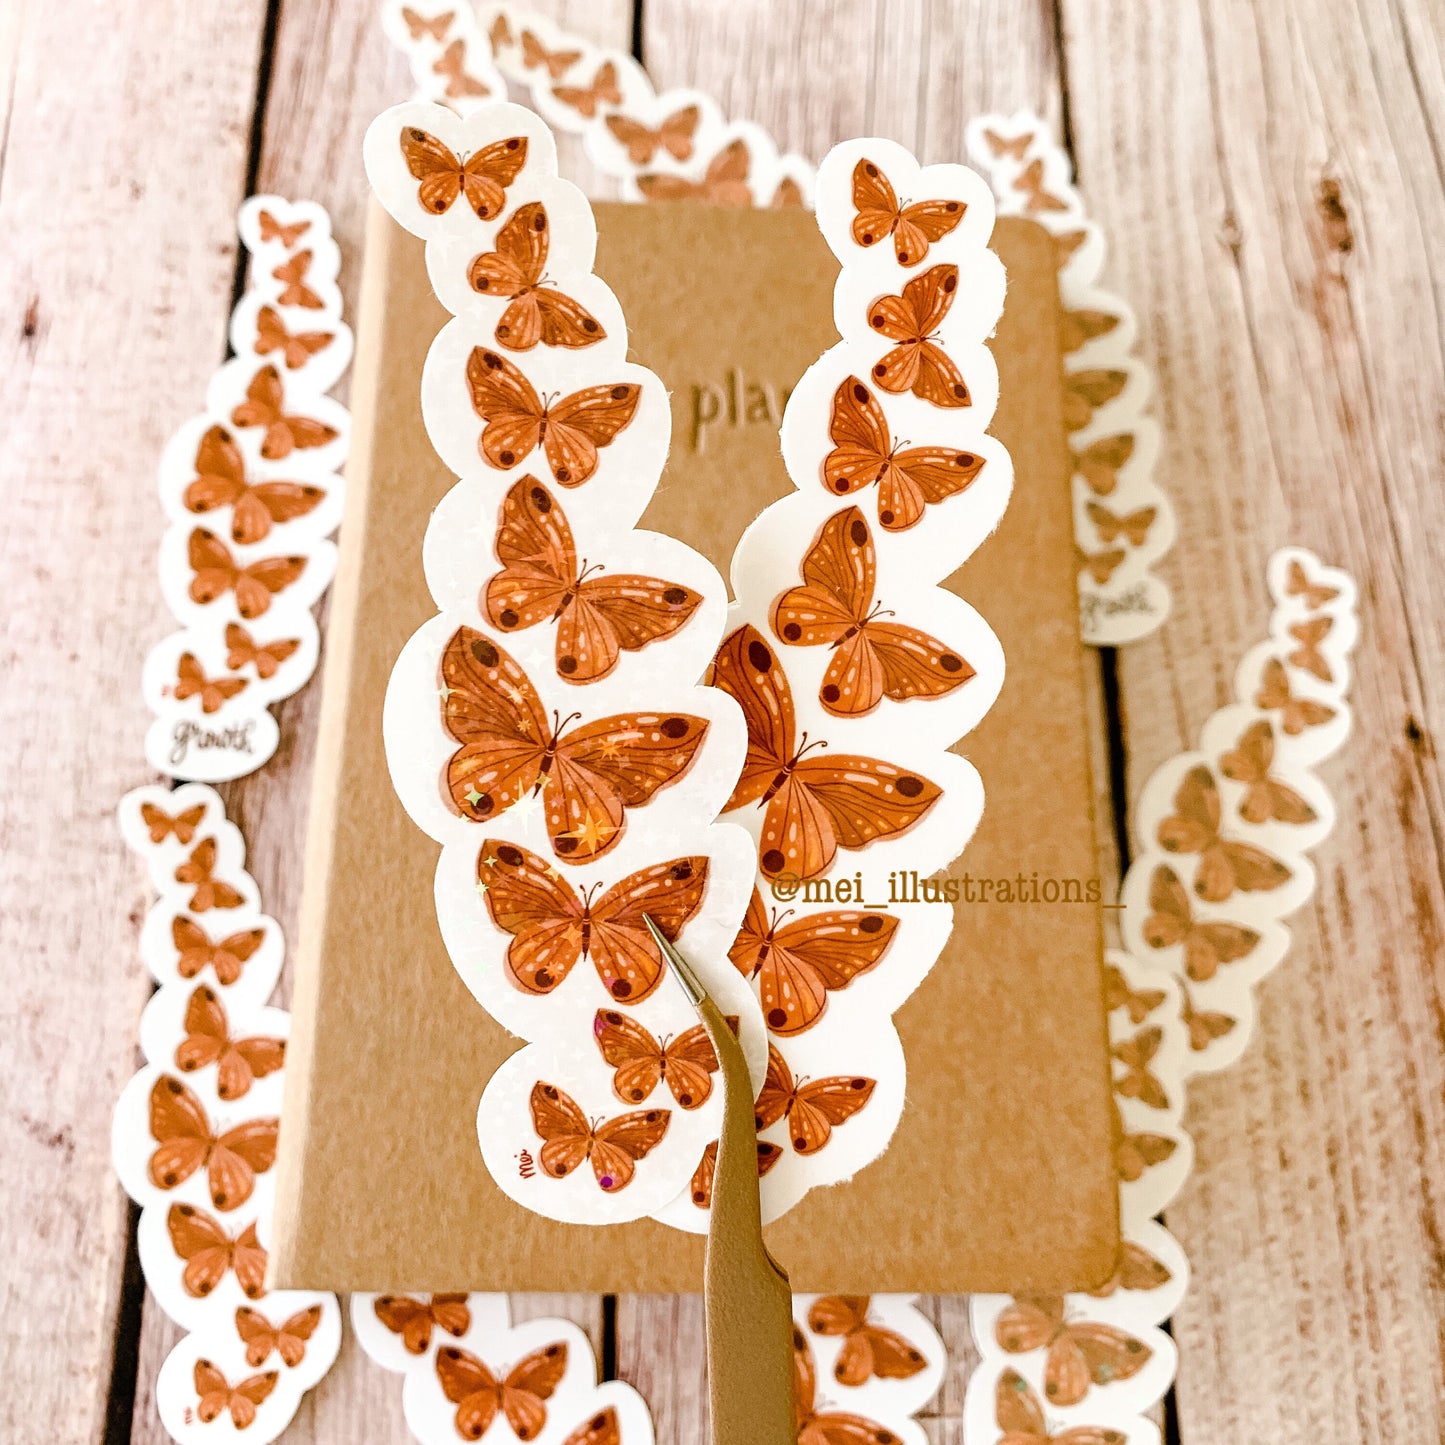 Brown Butterflies sticker (no quote)